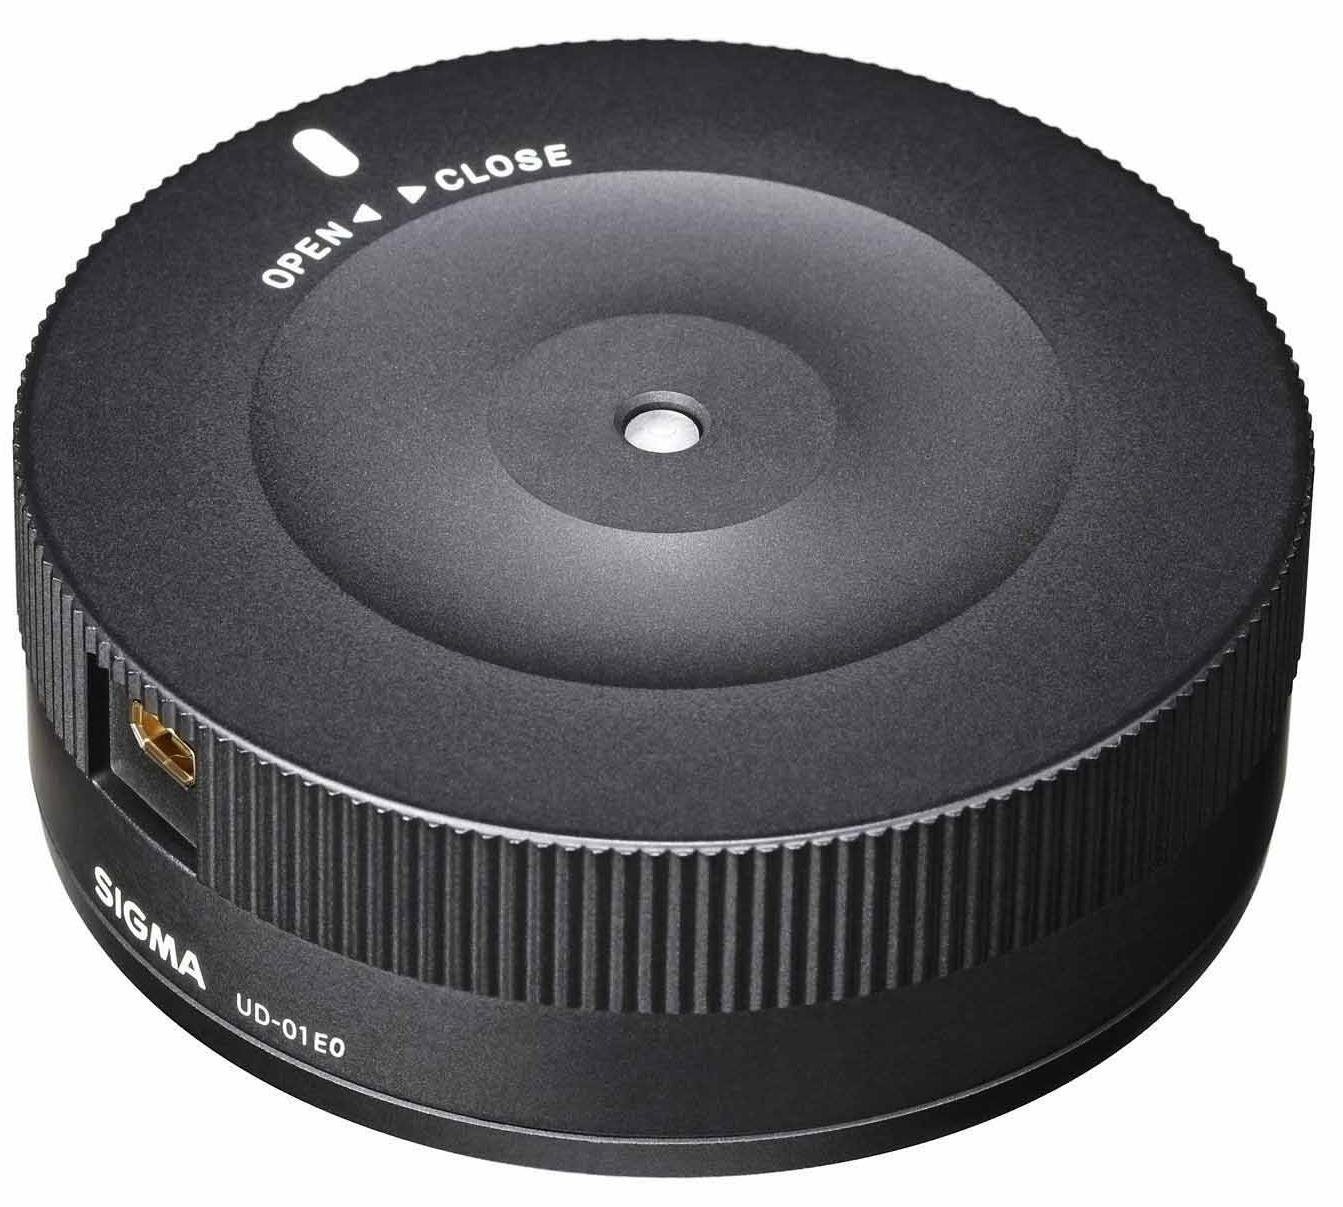 SIGMA USB Dock Canon Objektivbajonett schwarz Objektivzubehör von SIGMA